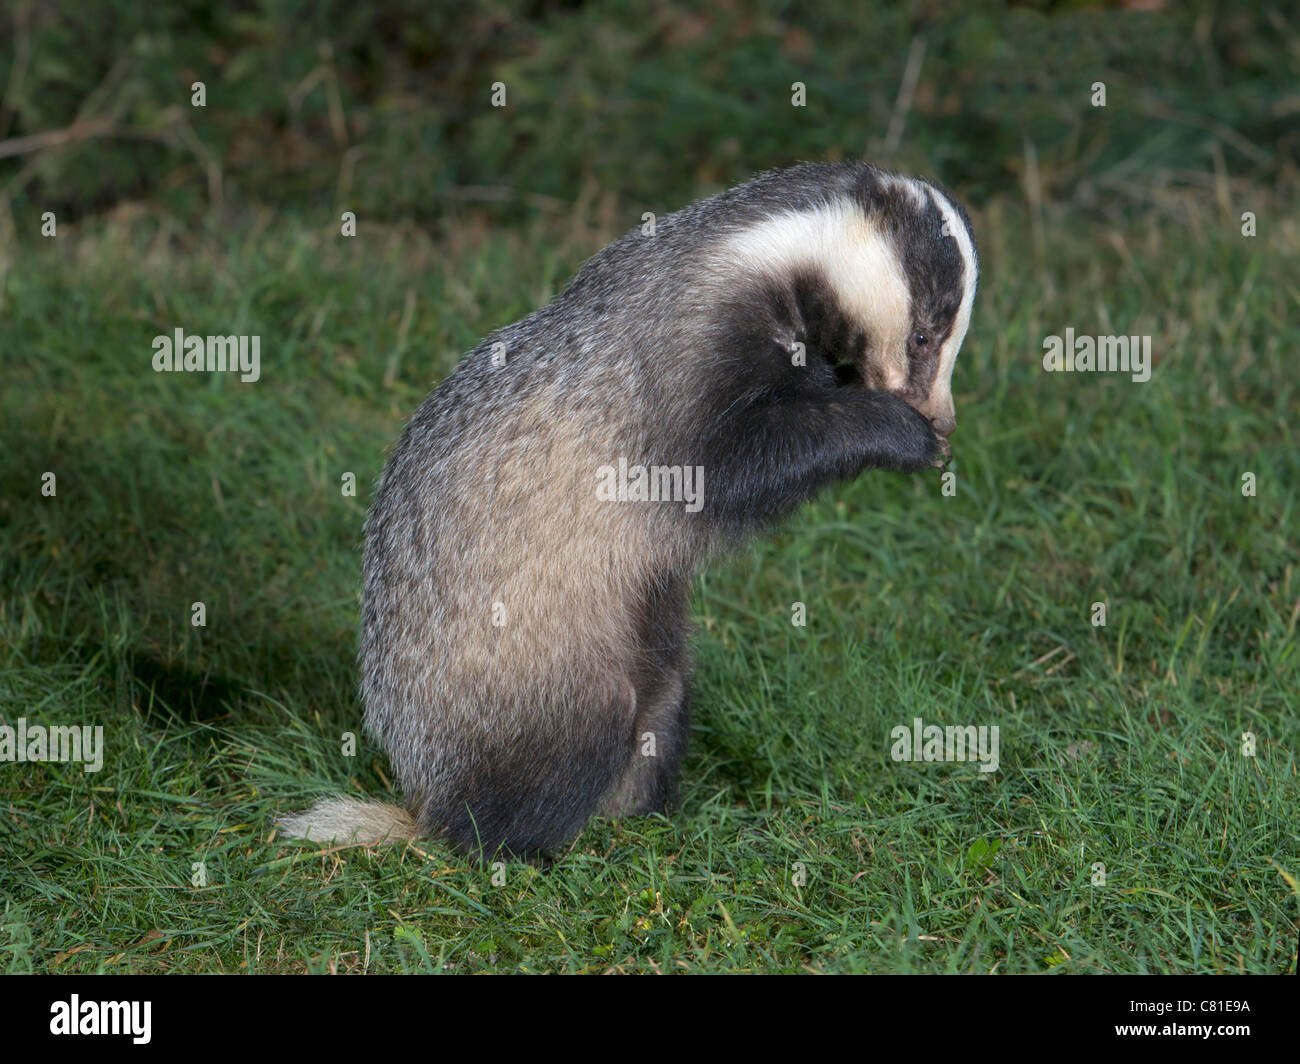 European badger sitting upright Stock Photo